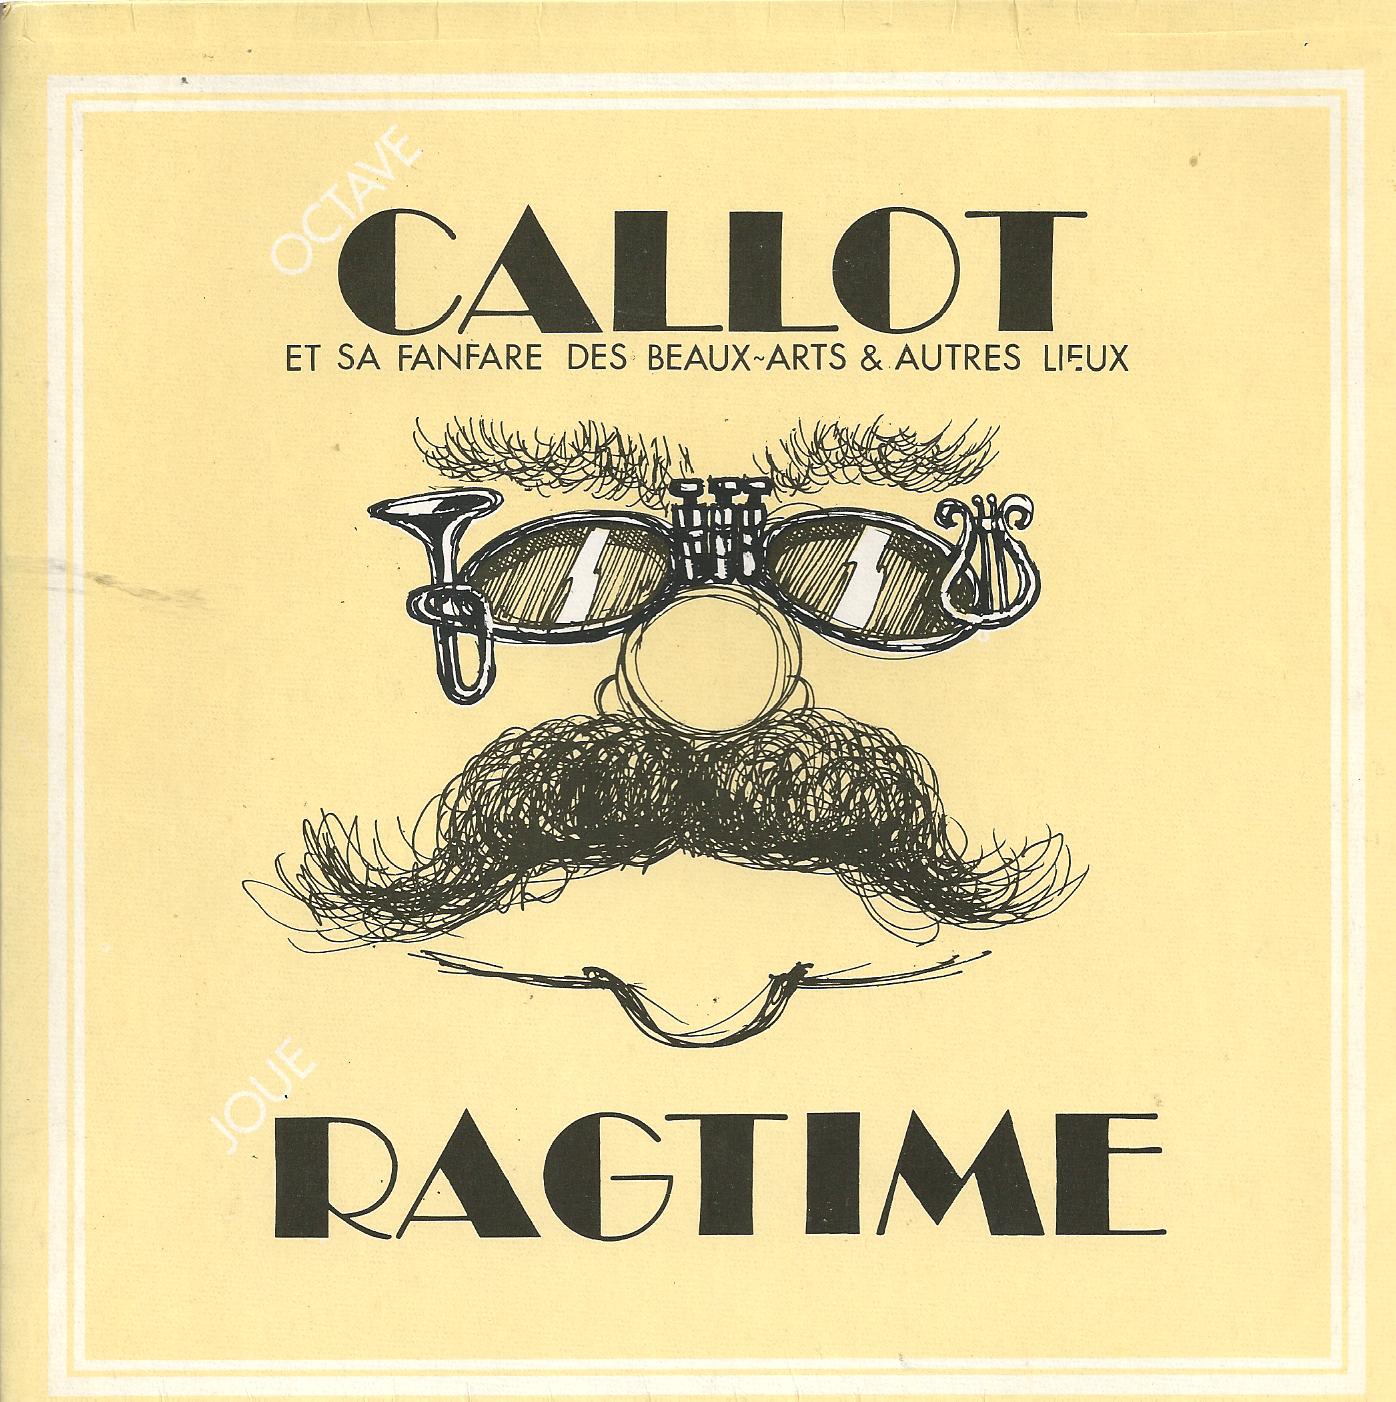 1983 : Fanfare Octave Callot "Ragtime" - pochette recto